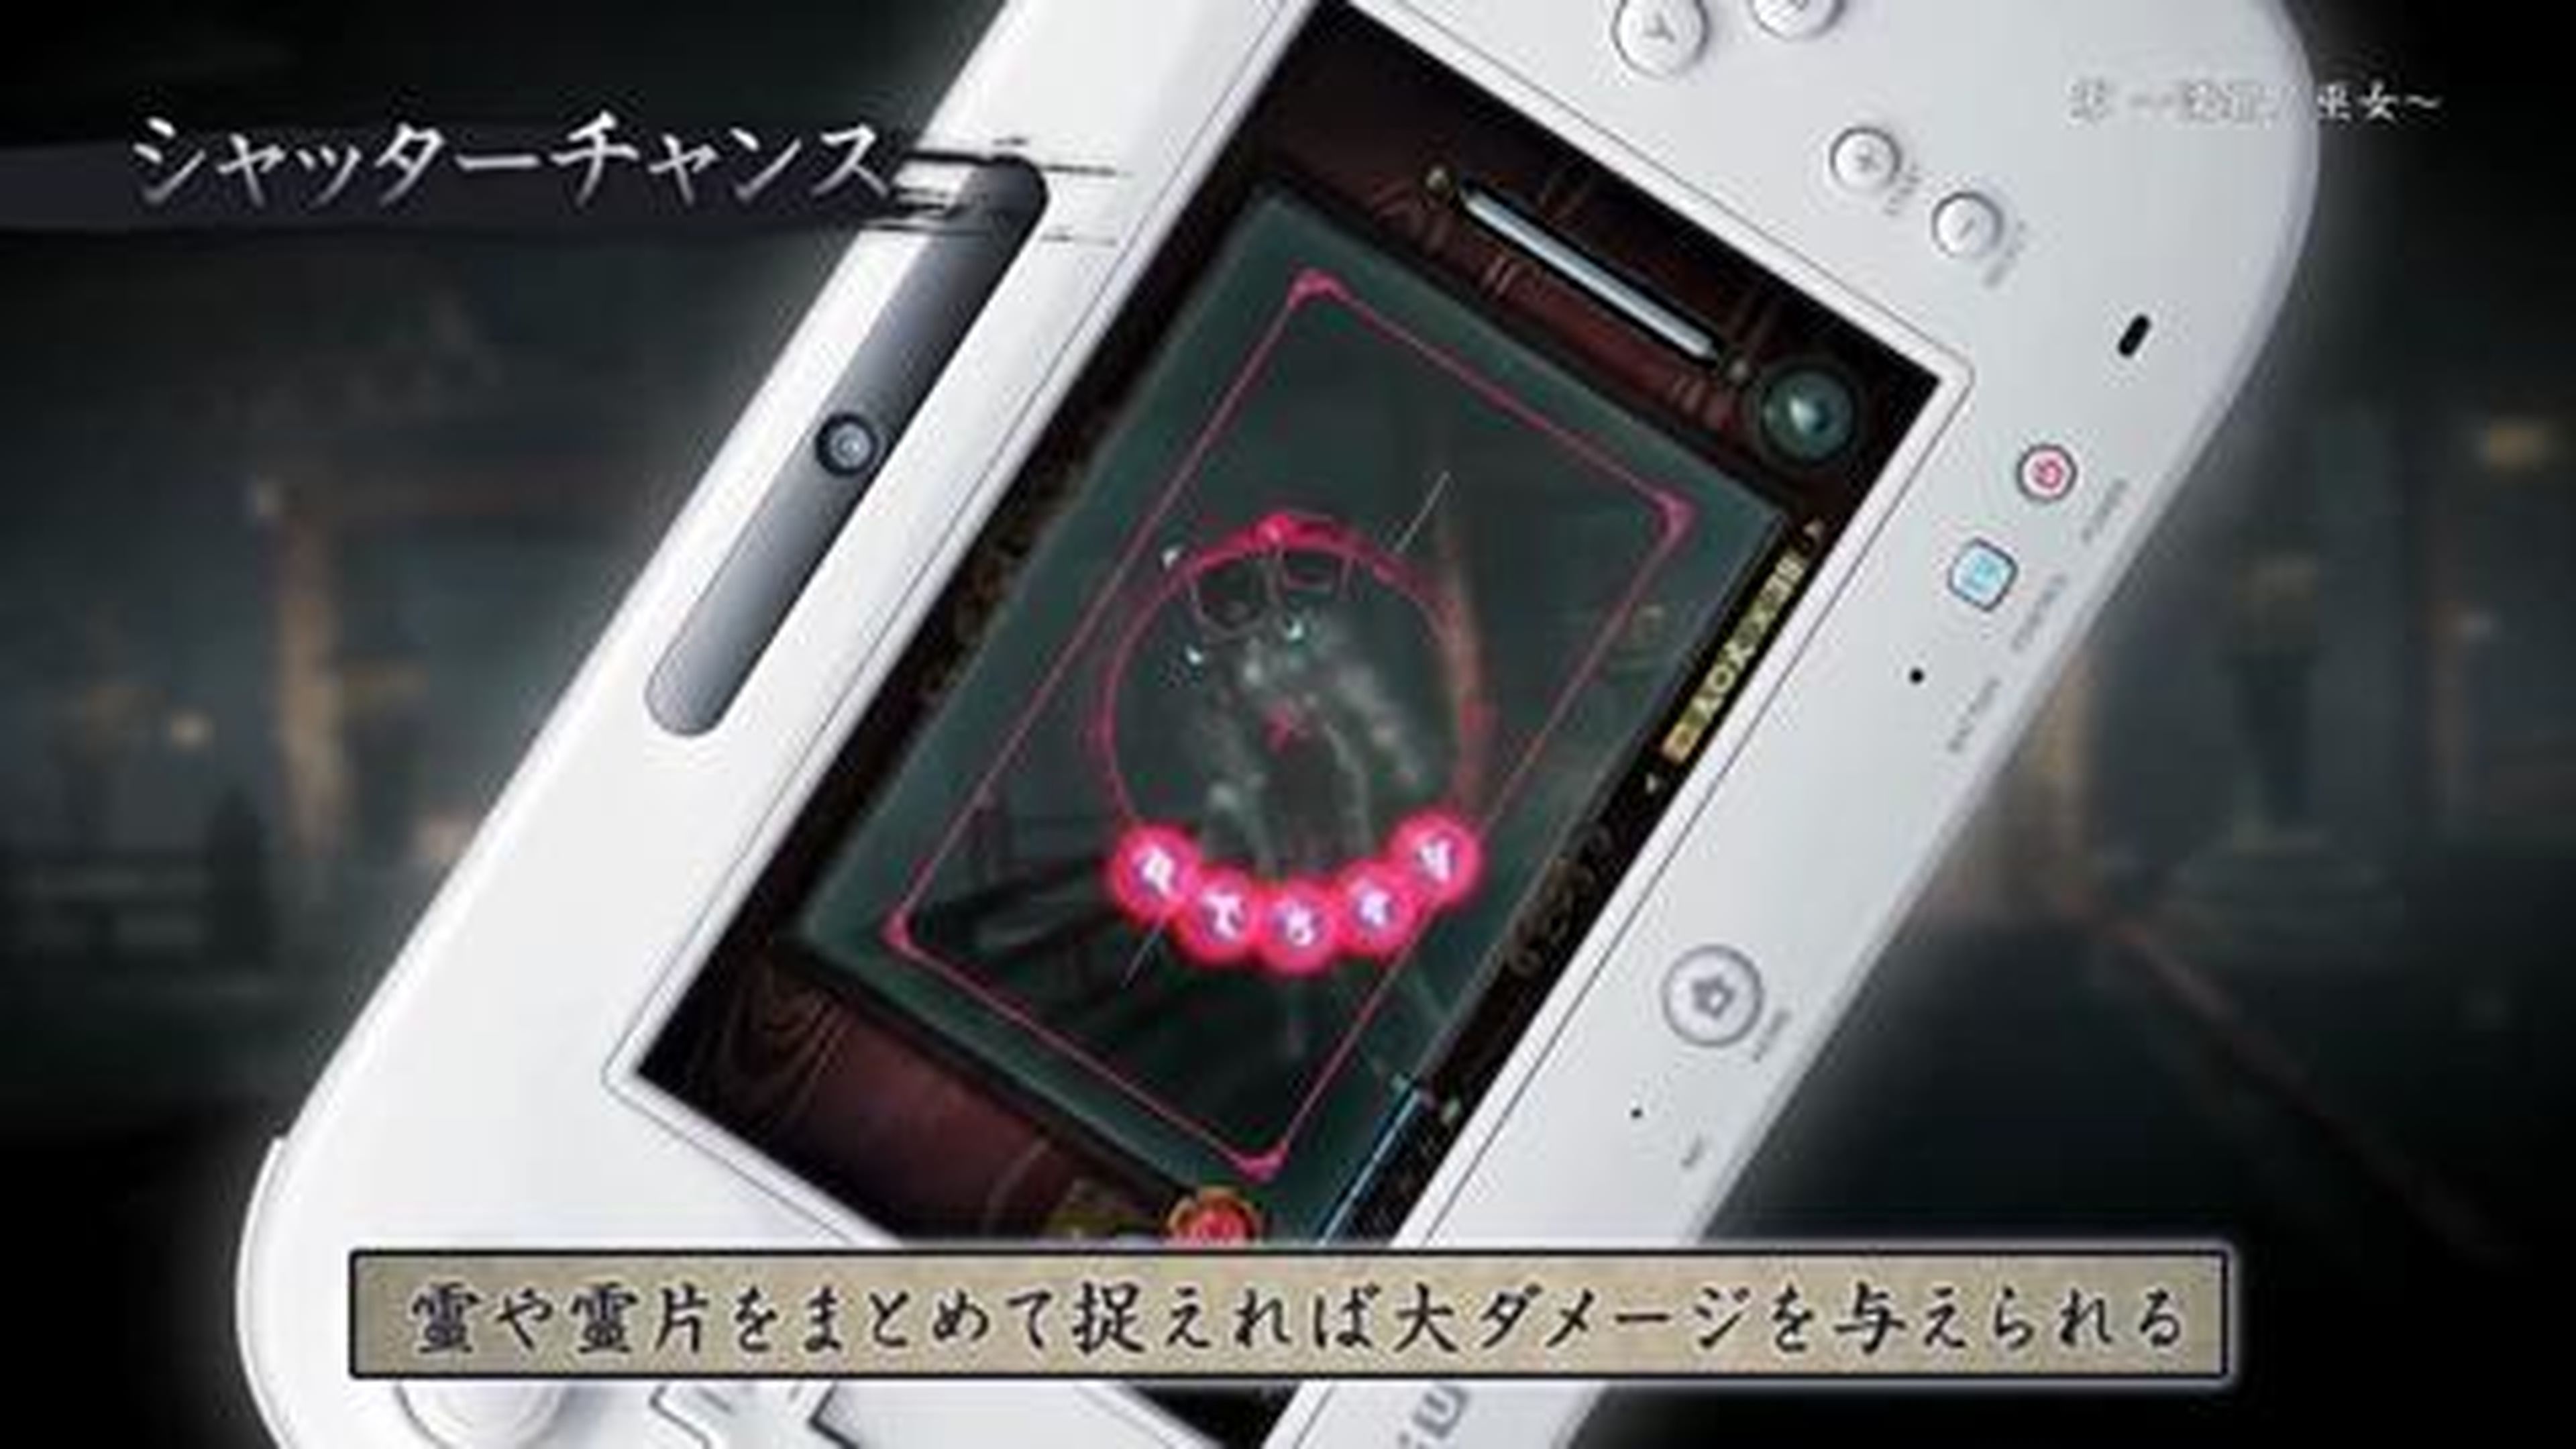 Fatal Frame 5 Trailer (Wii U) - Project Zero 5